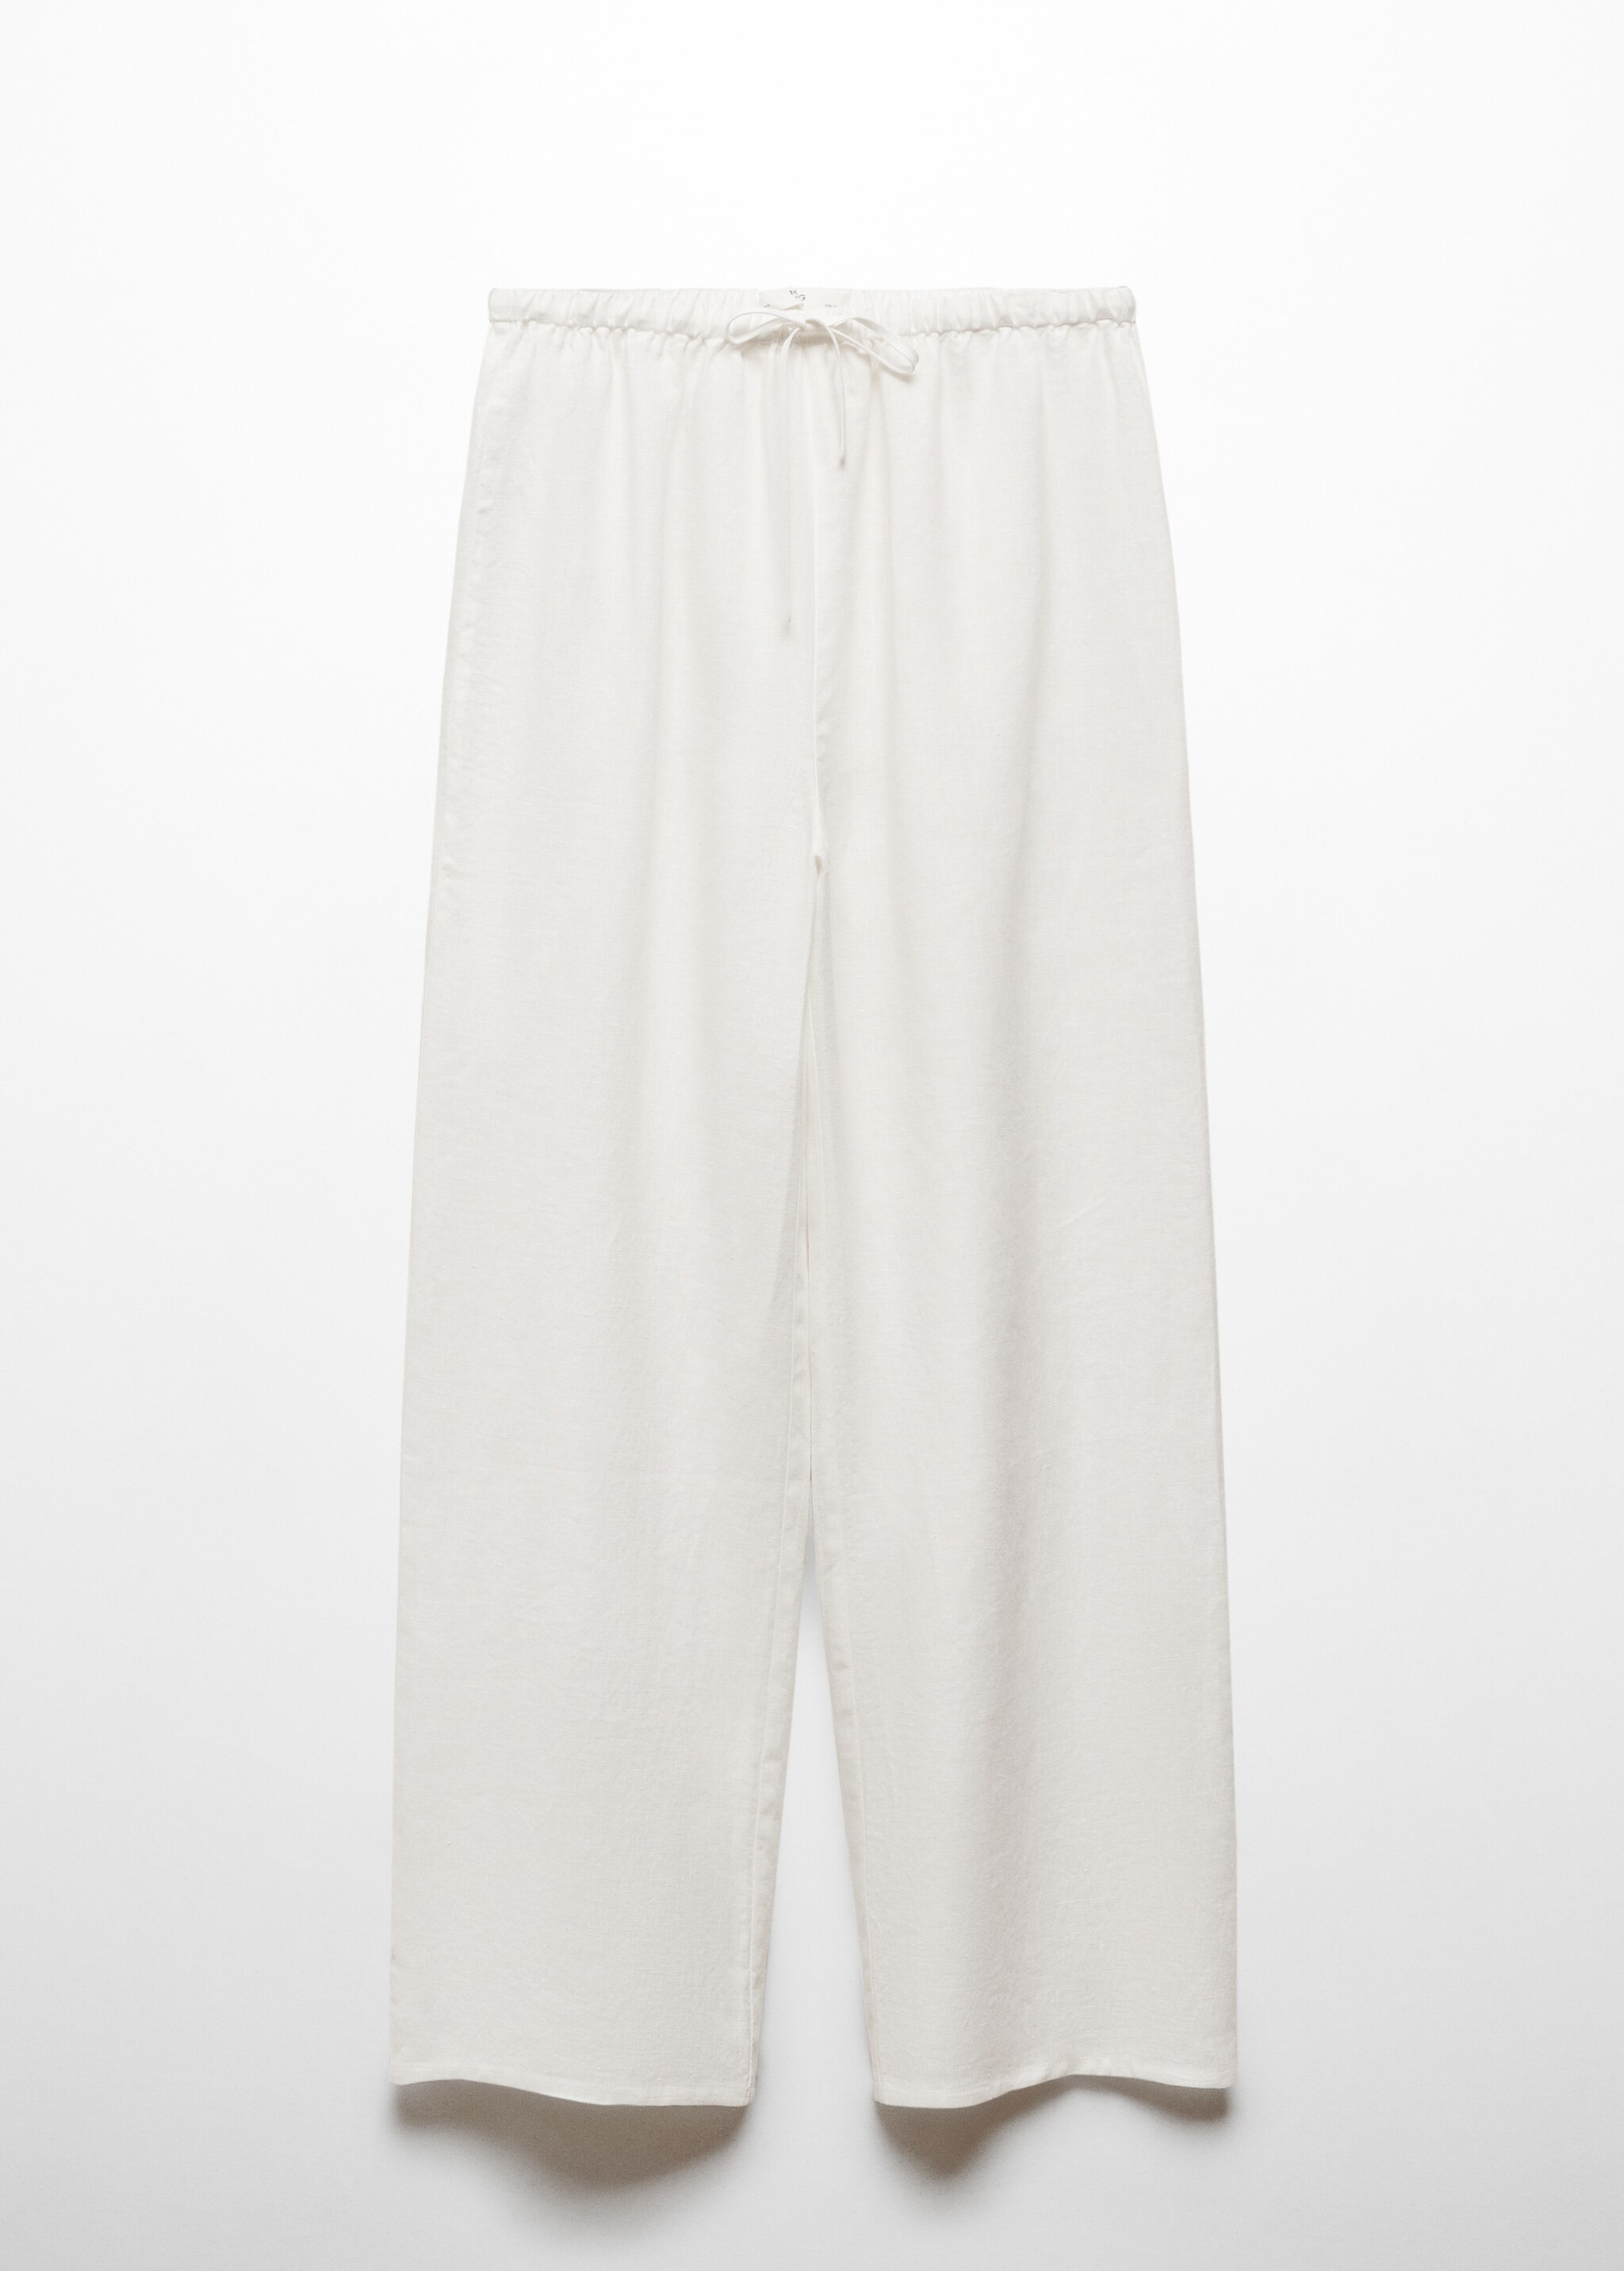 Pantalón pijama 100% lino - Artículo sin modelo